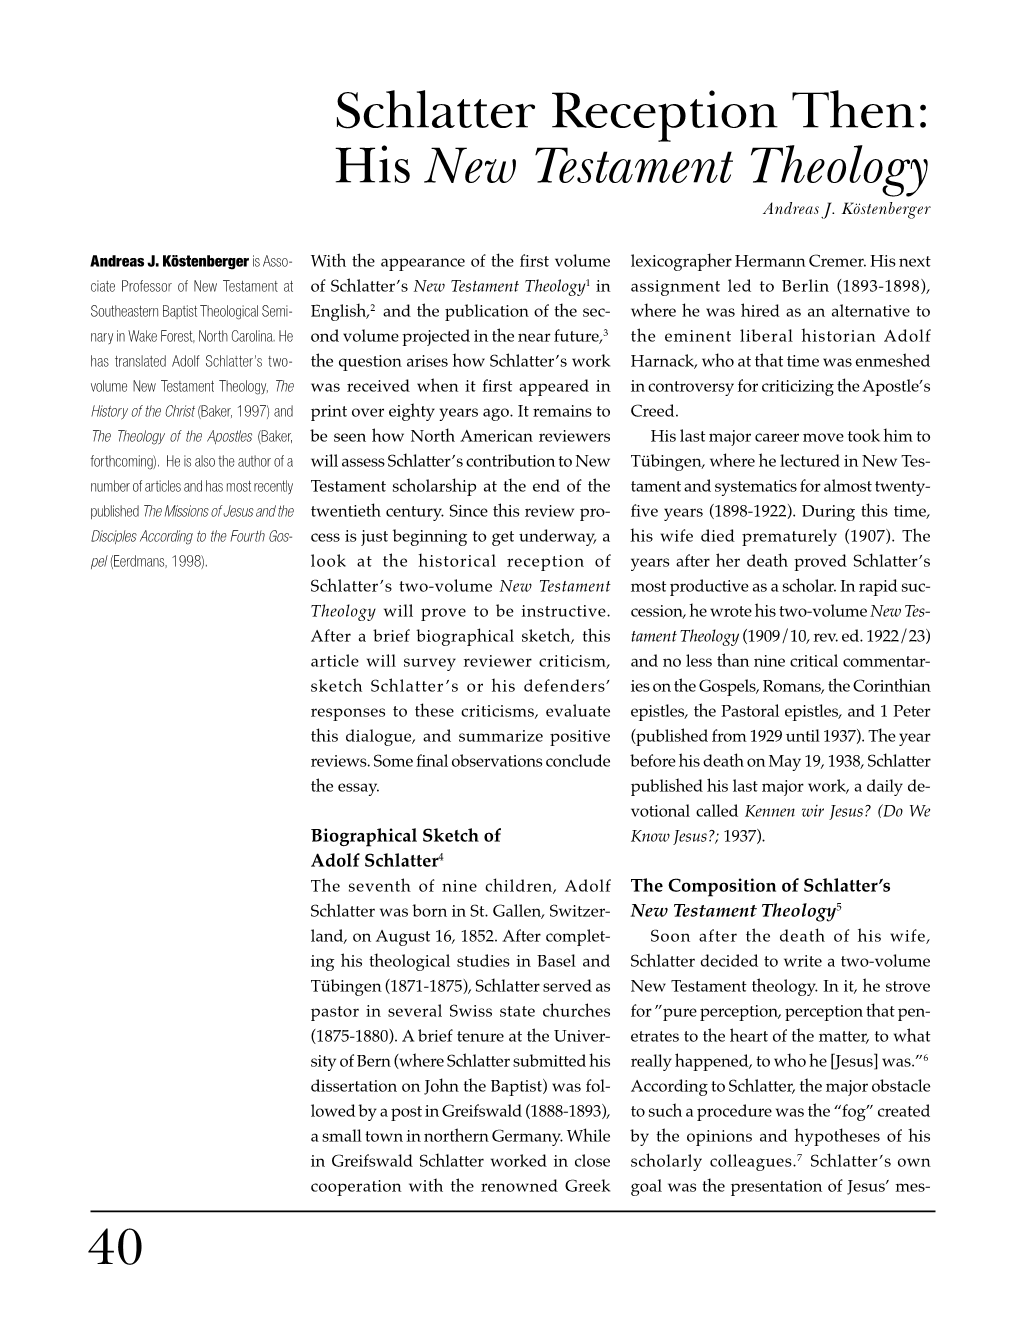 His New Testament Theology Andreas J